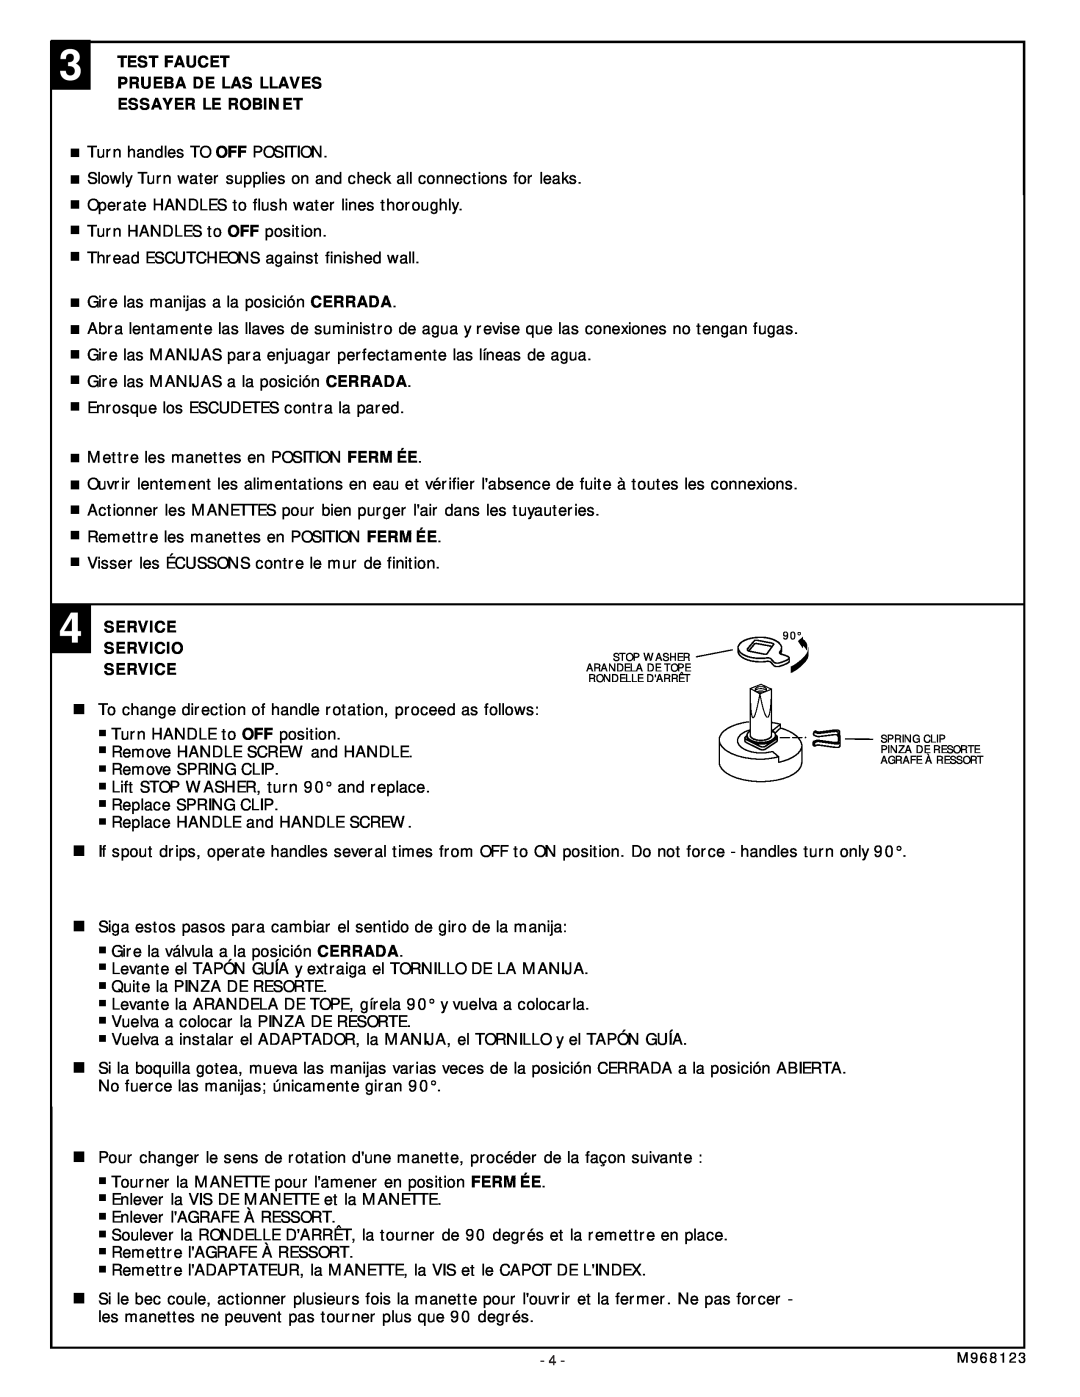 American Standard 8340.243.002, 8340.243.004 installation instructions Test Faucet, Prueba De Las Llaves, Essayer Le Robinet 